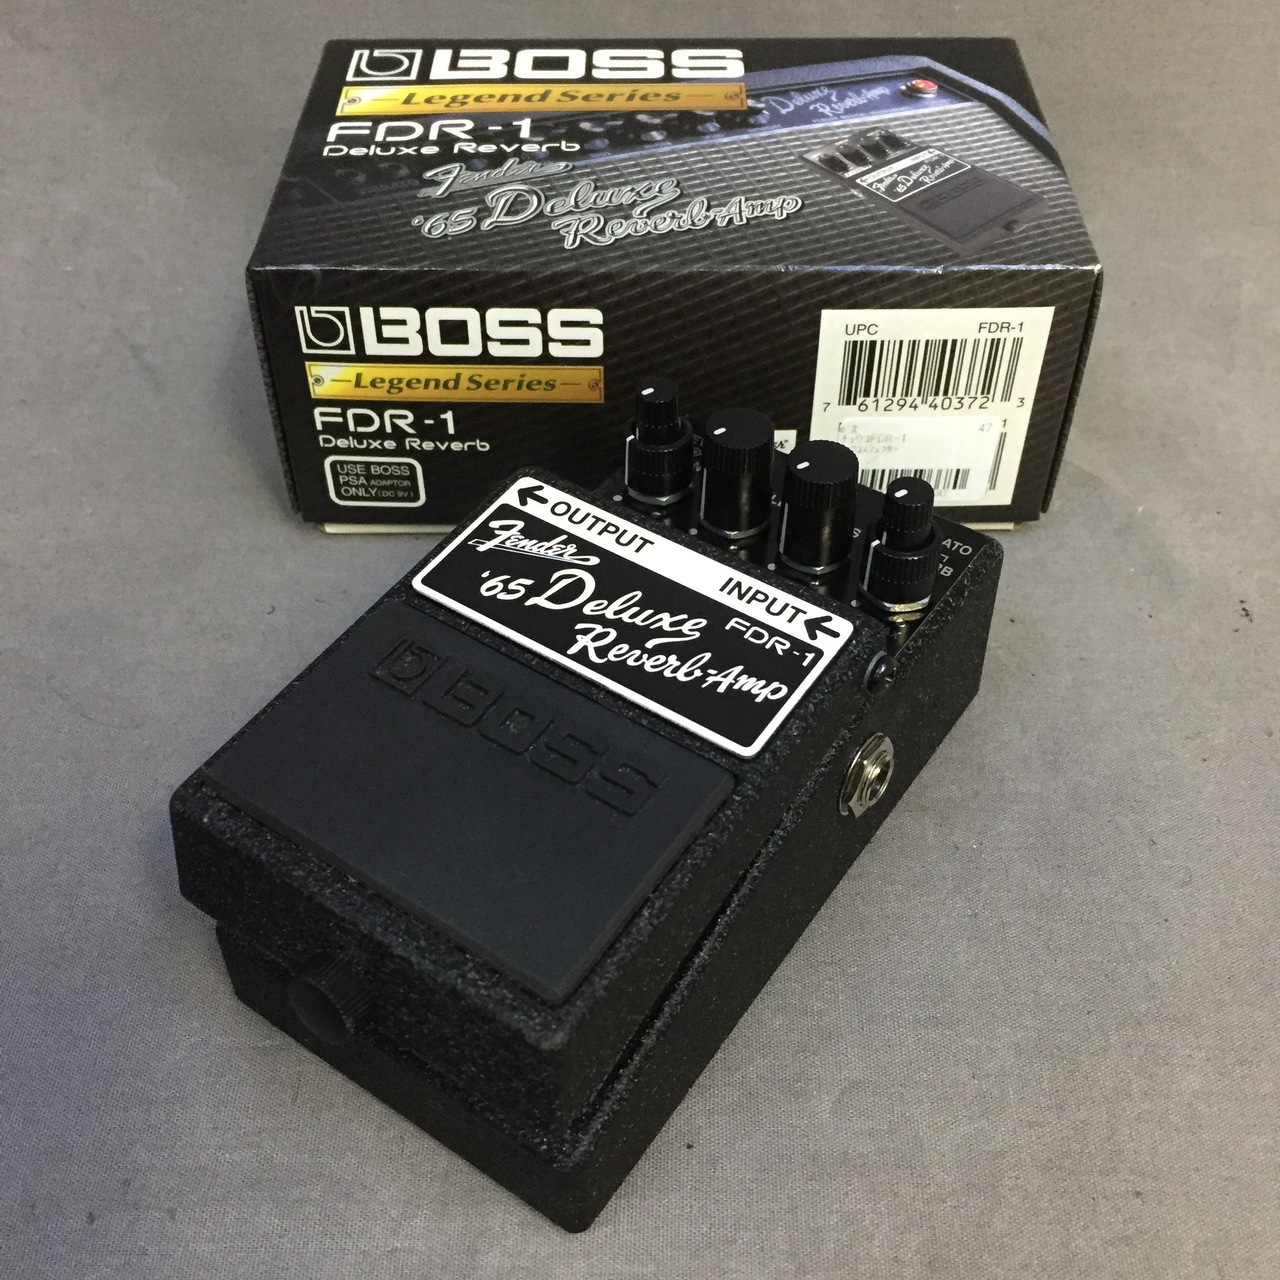 BOSS Legend Series FDR1 Deluxe Reverb楽器・機材